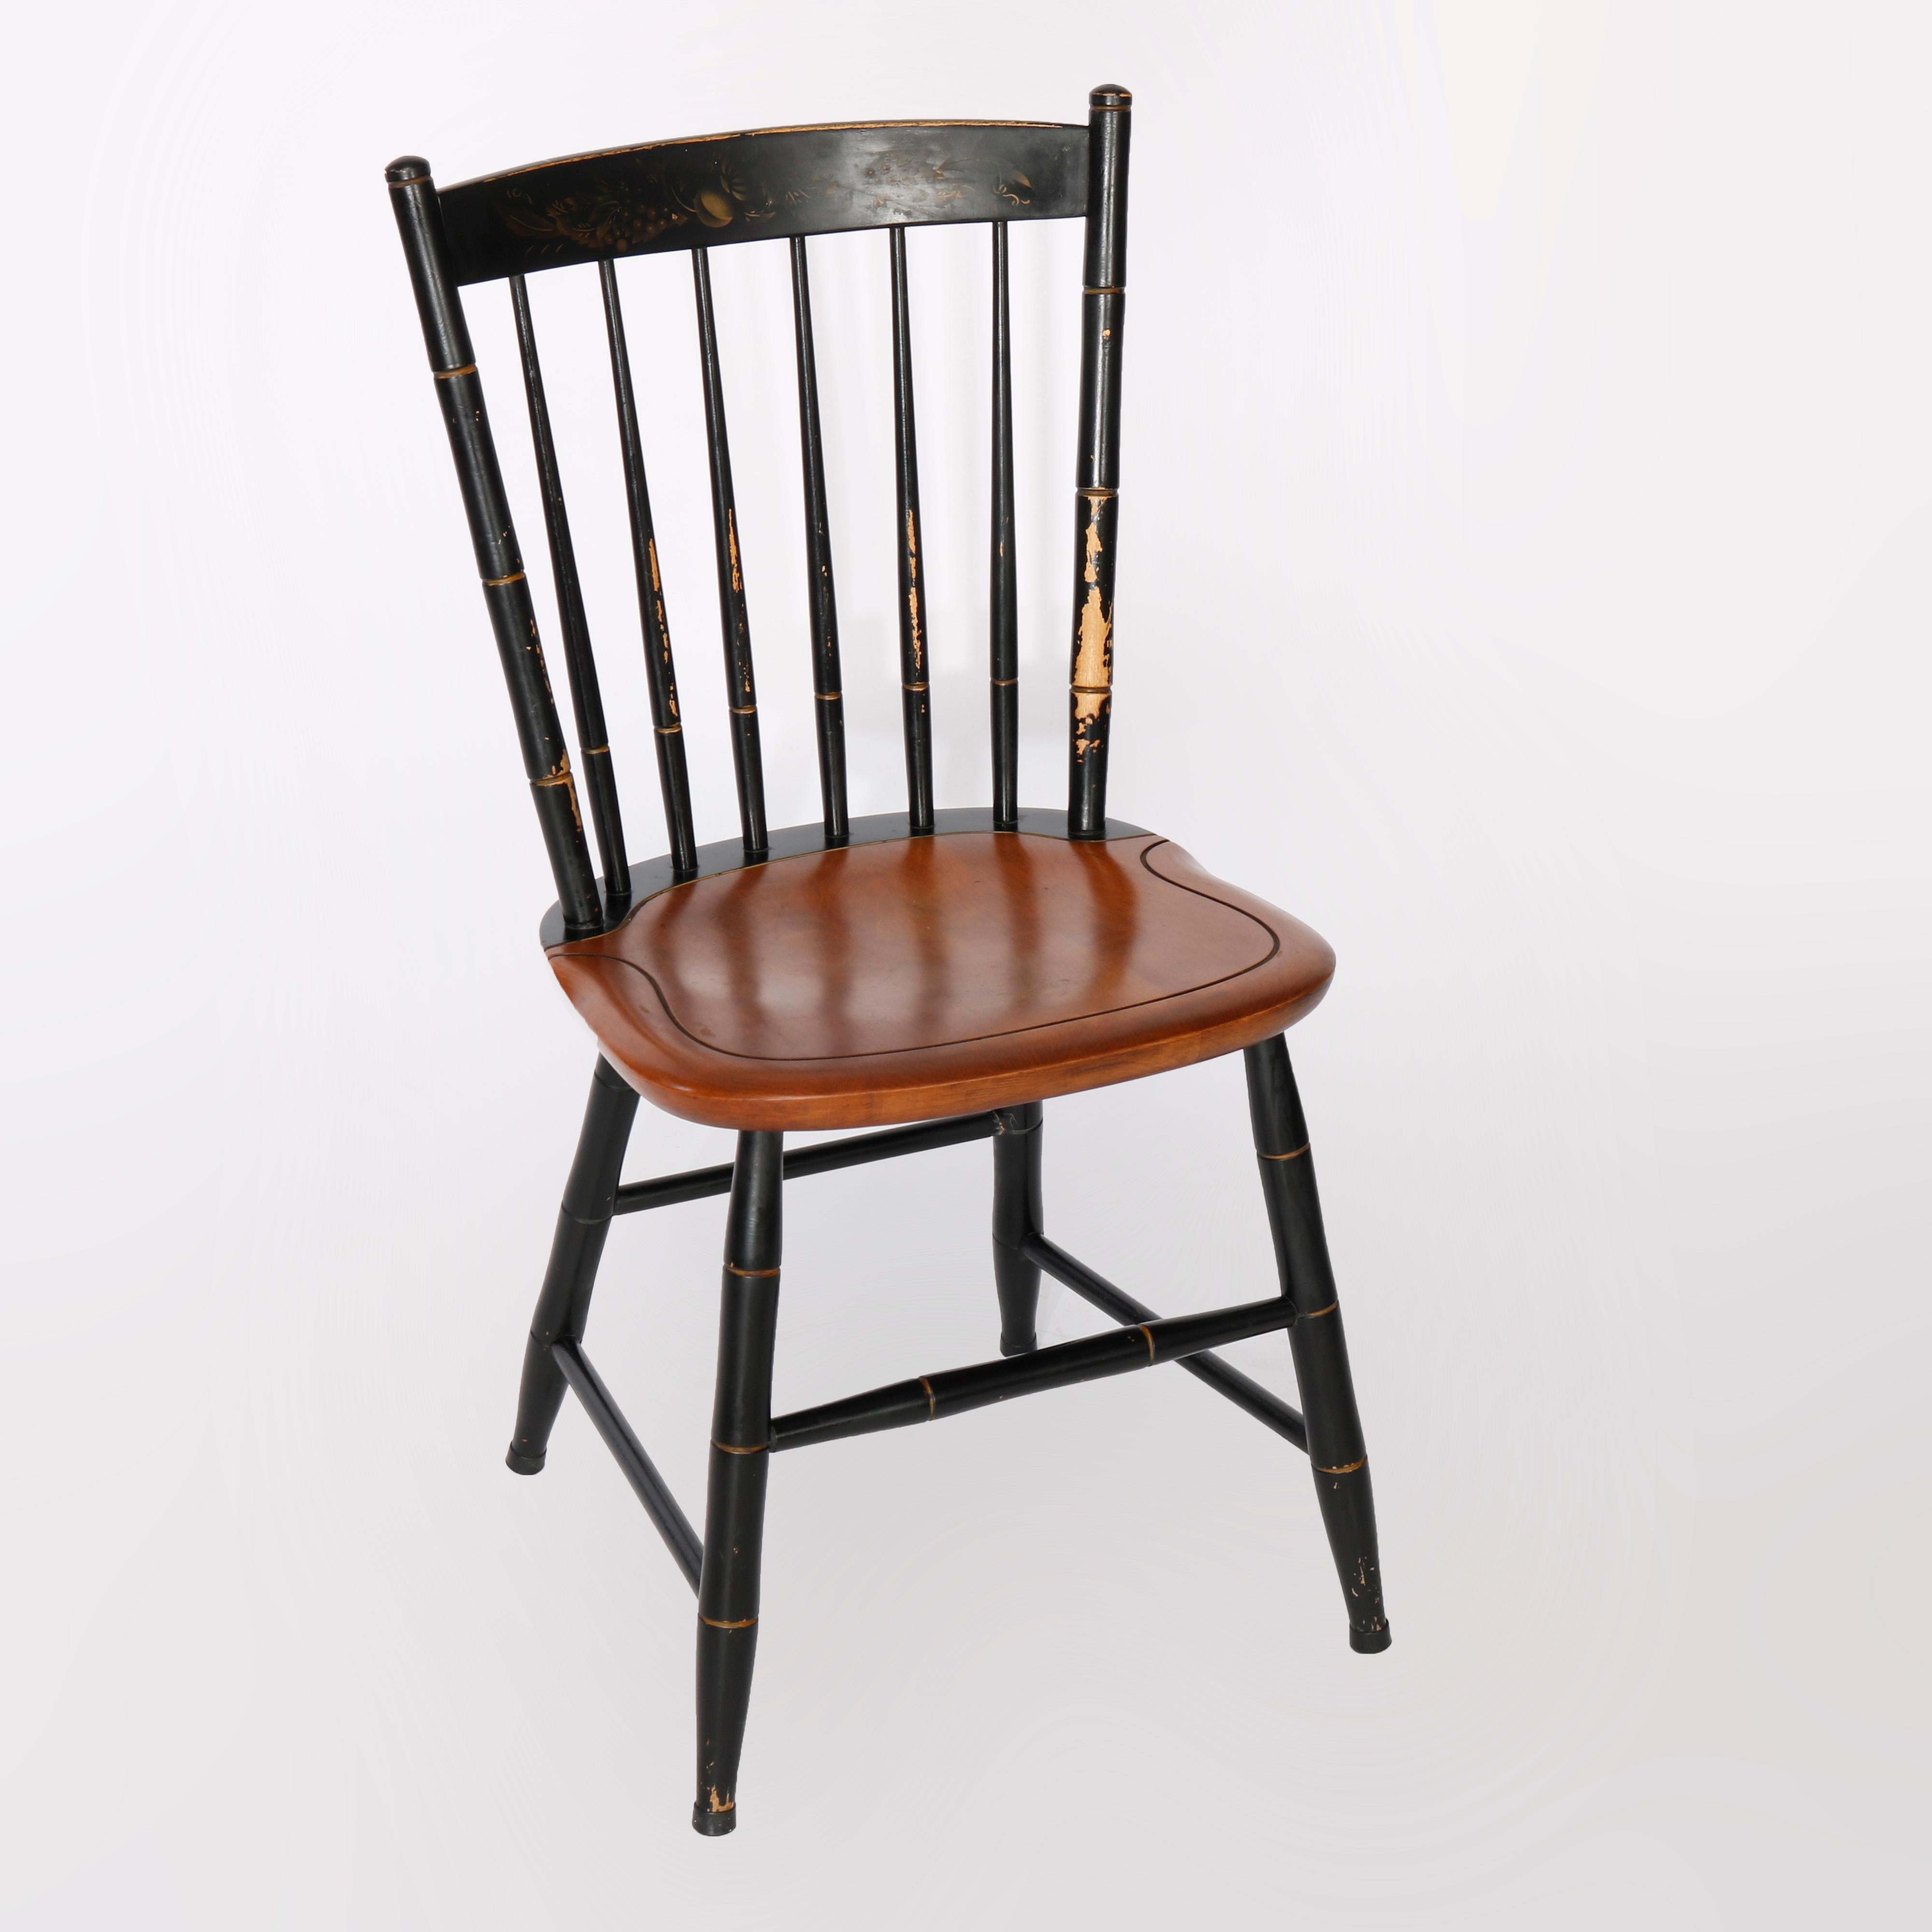 American Six Ebonized & Stenciled Windsor Style Plank Bottom Chairs 20th C